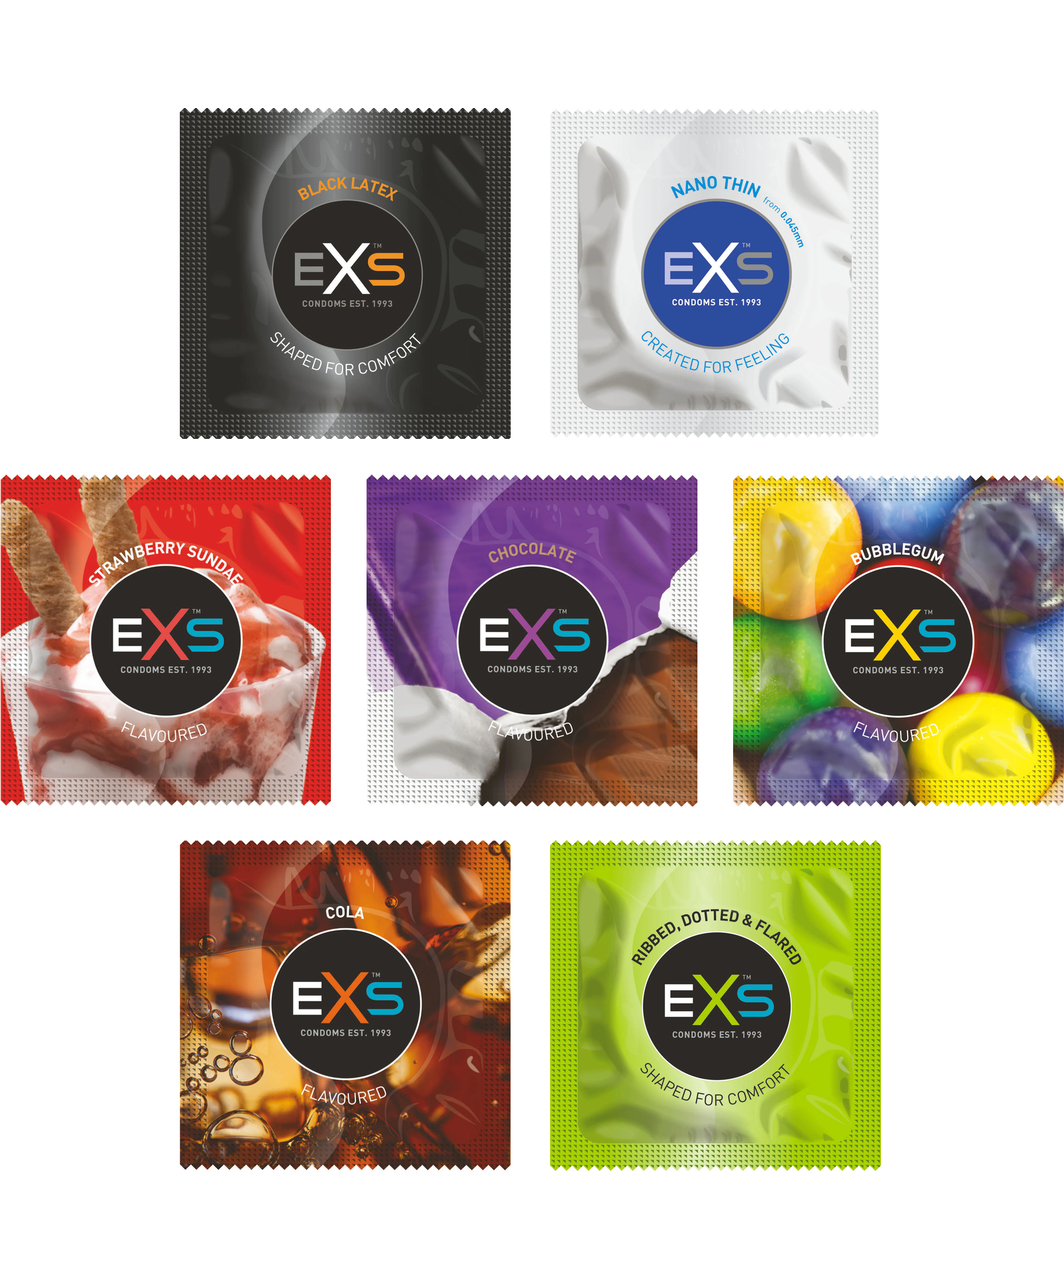 EXS Variety Pack 1 (48 pcs)